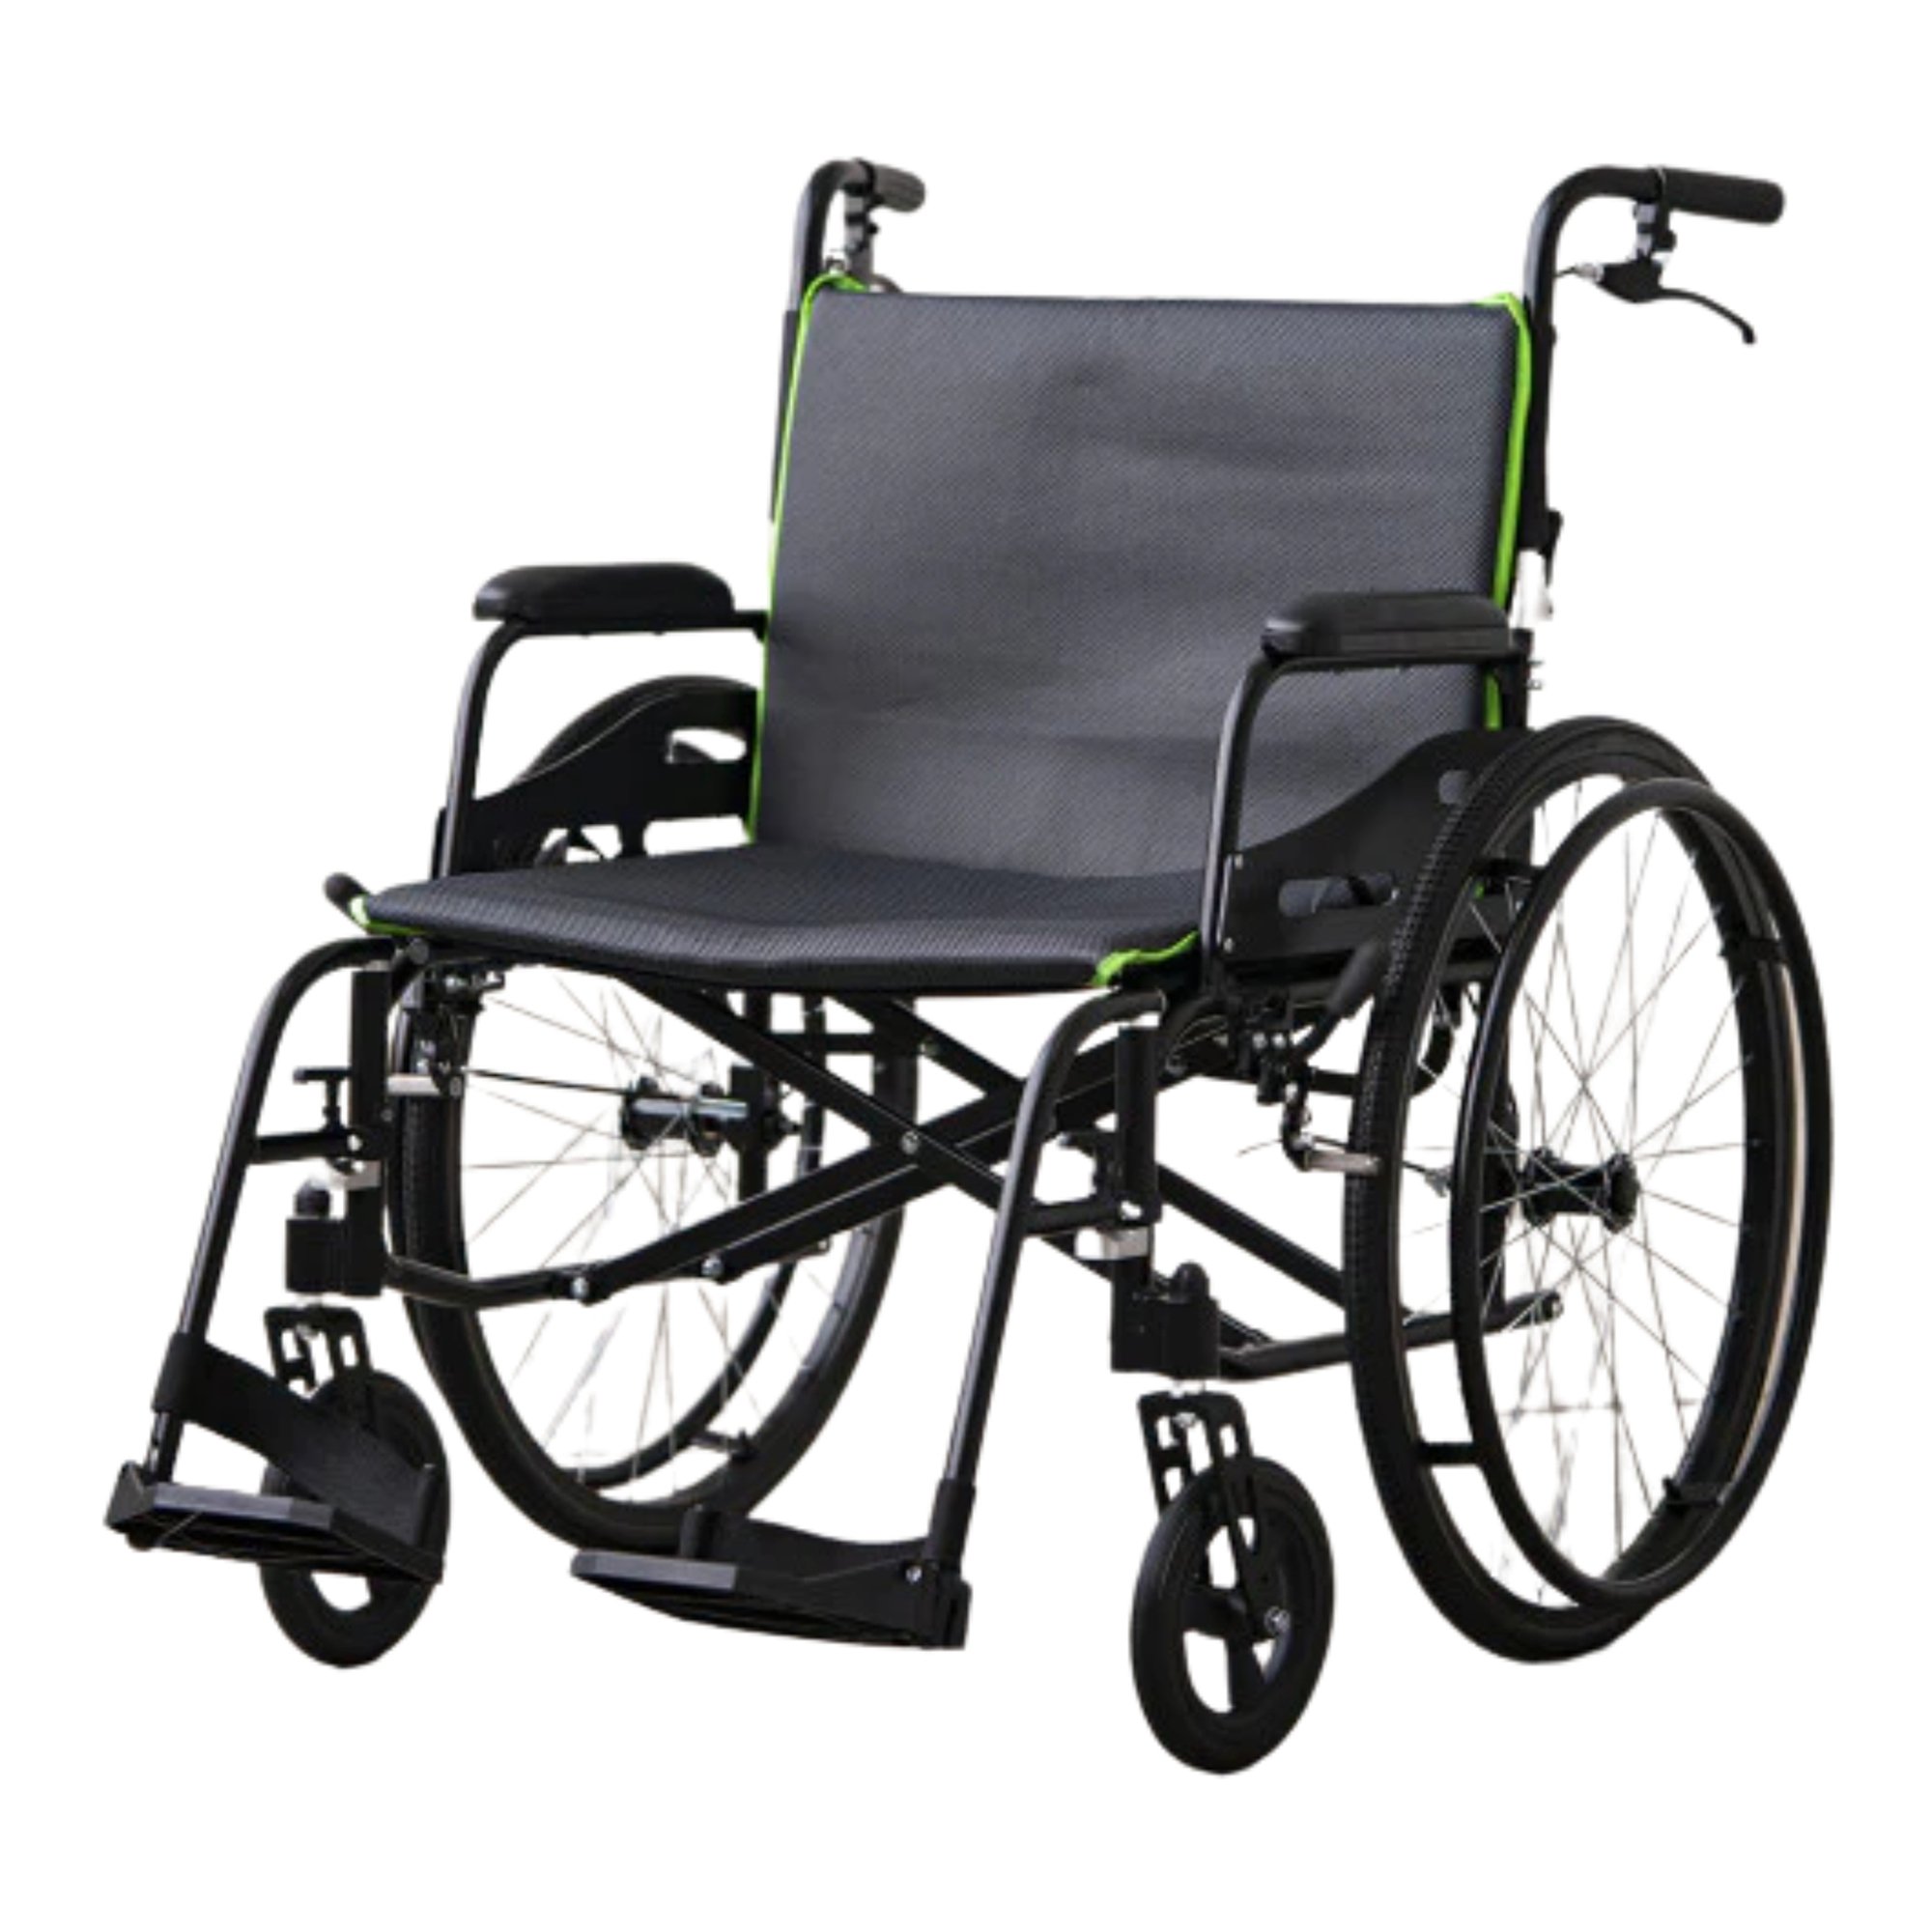 Feather Lightweight Wheelchair, 22 Inch Seat , CVS